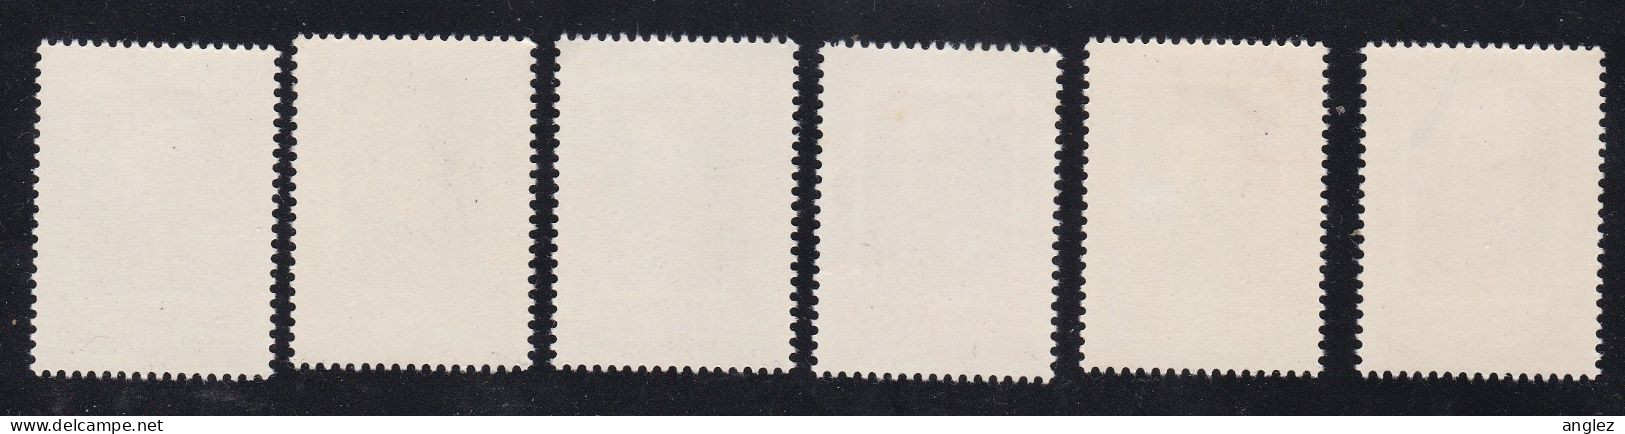 Belgium - 1952 Authors / Writers 6v MNH - Unused Stamps